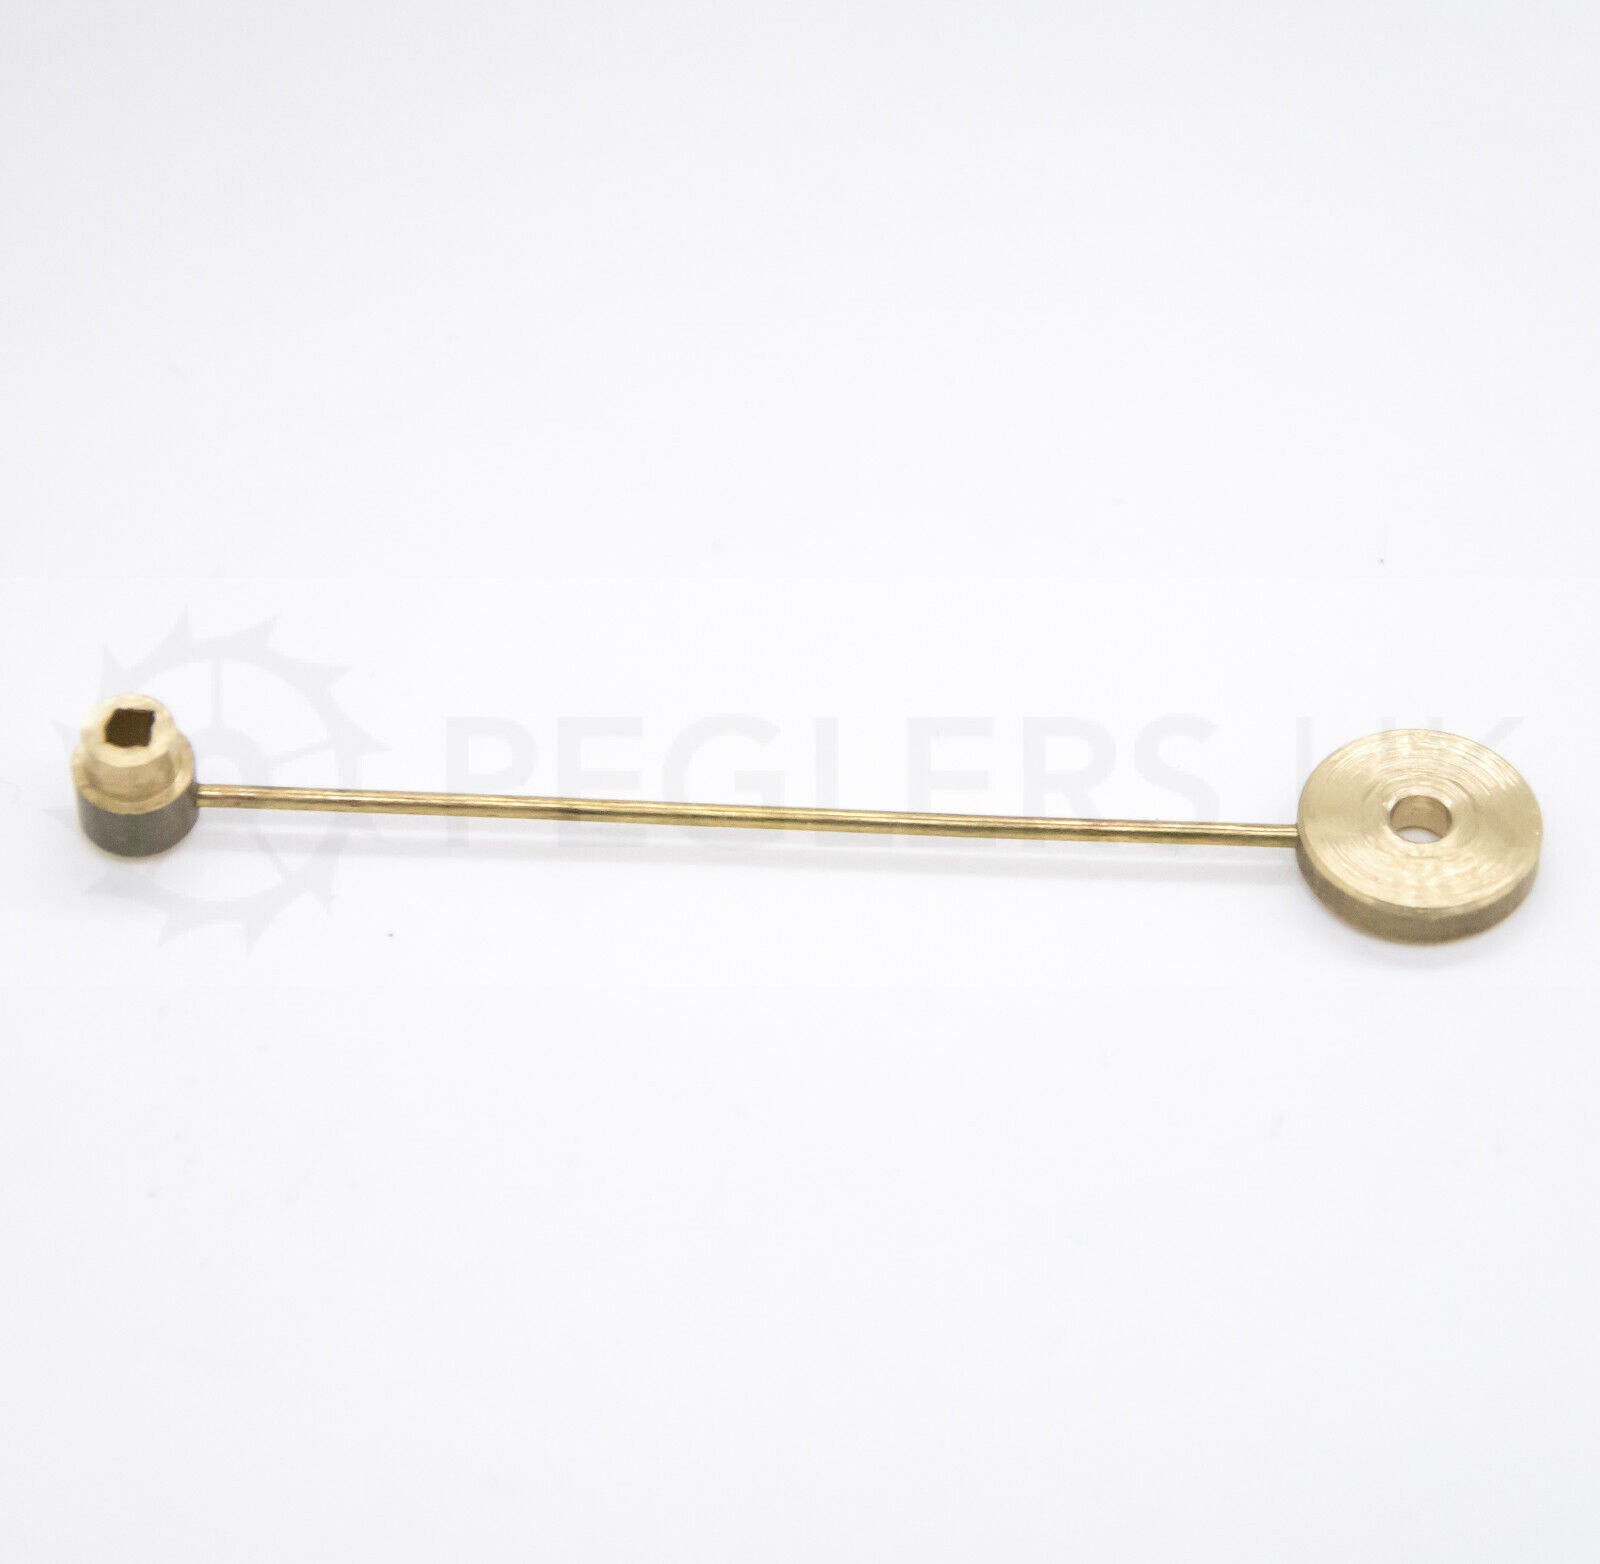 Bell Hammer for French Clocks - 75mm